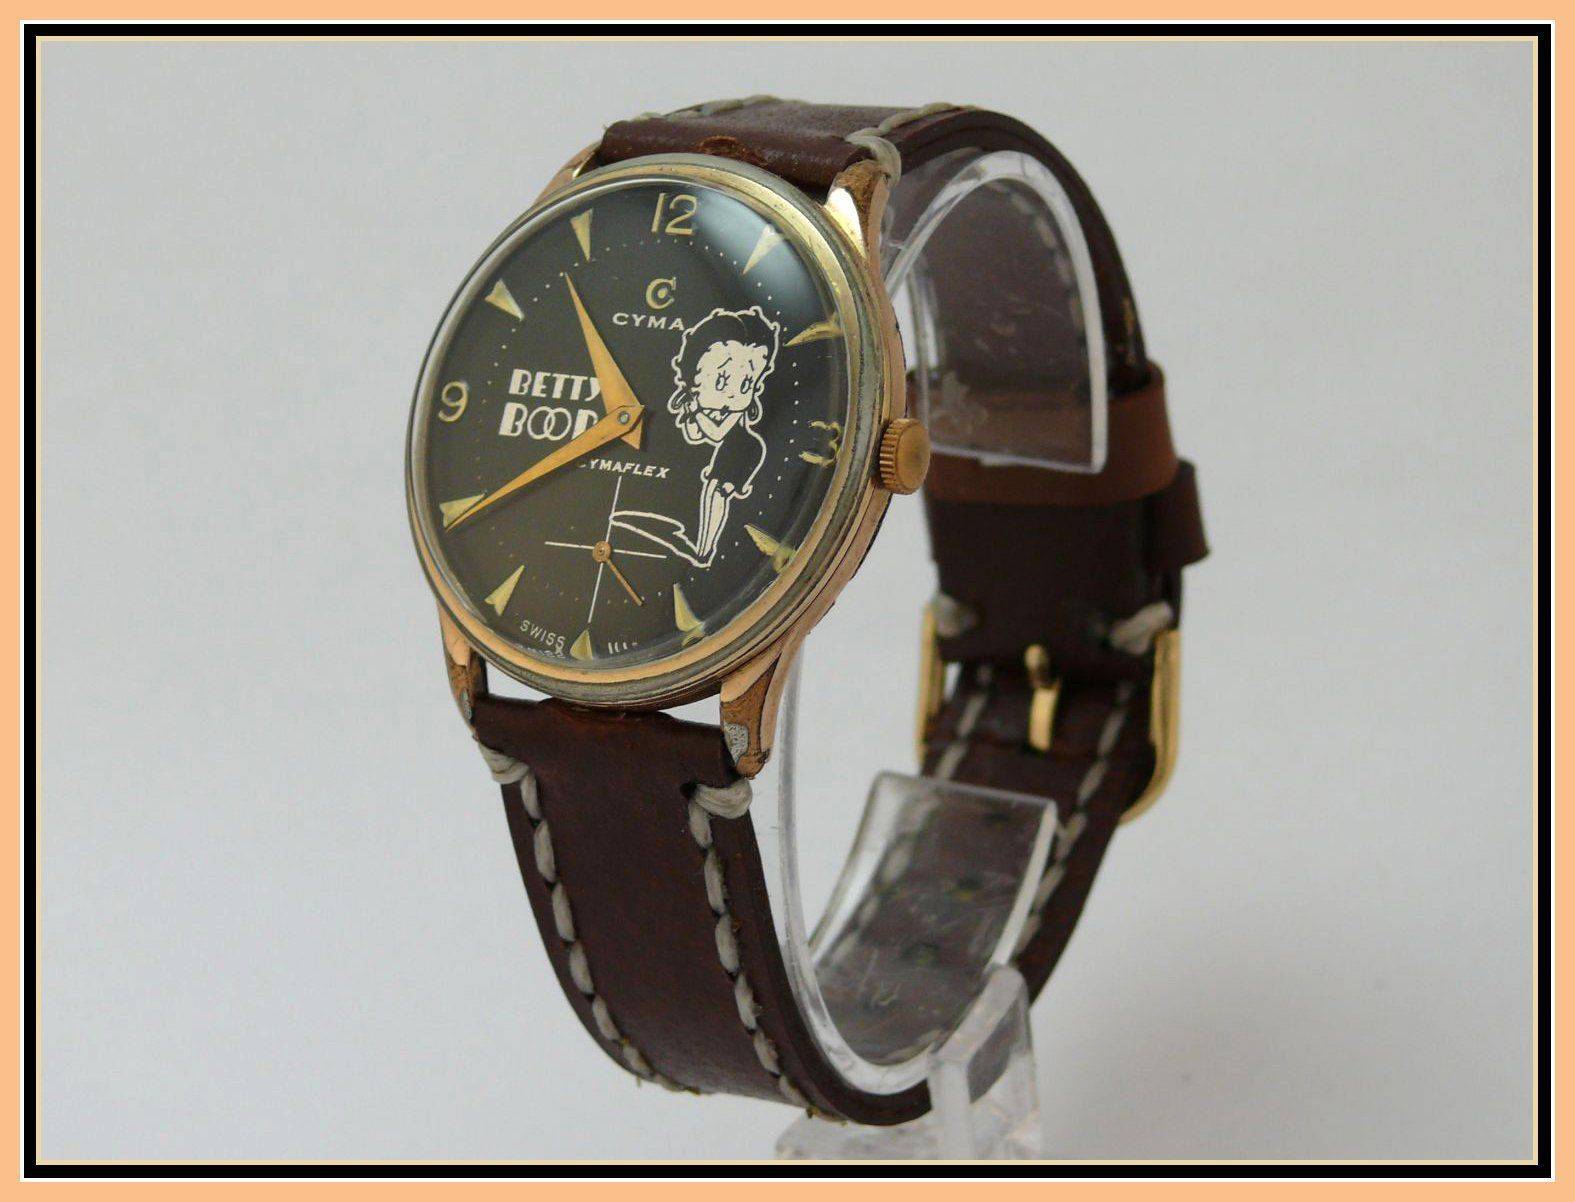 Cyma 586 k _ Betty boop_La relojeria vintage (46).JPG